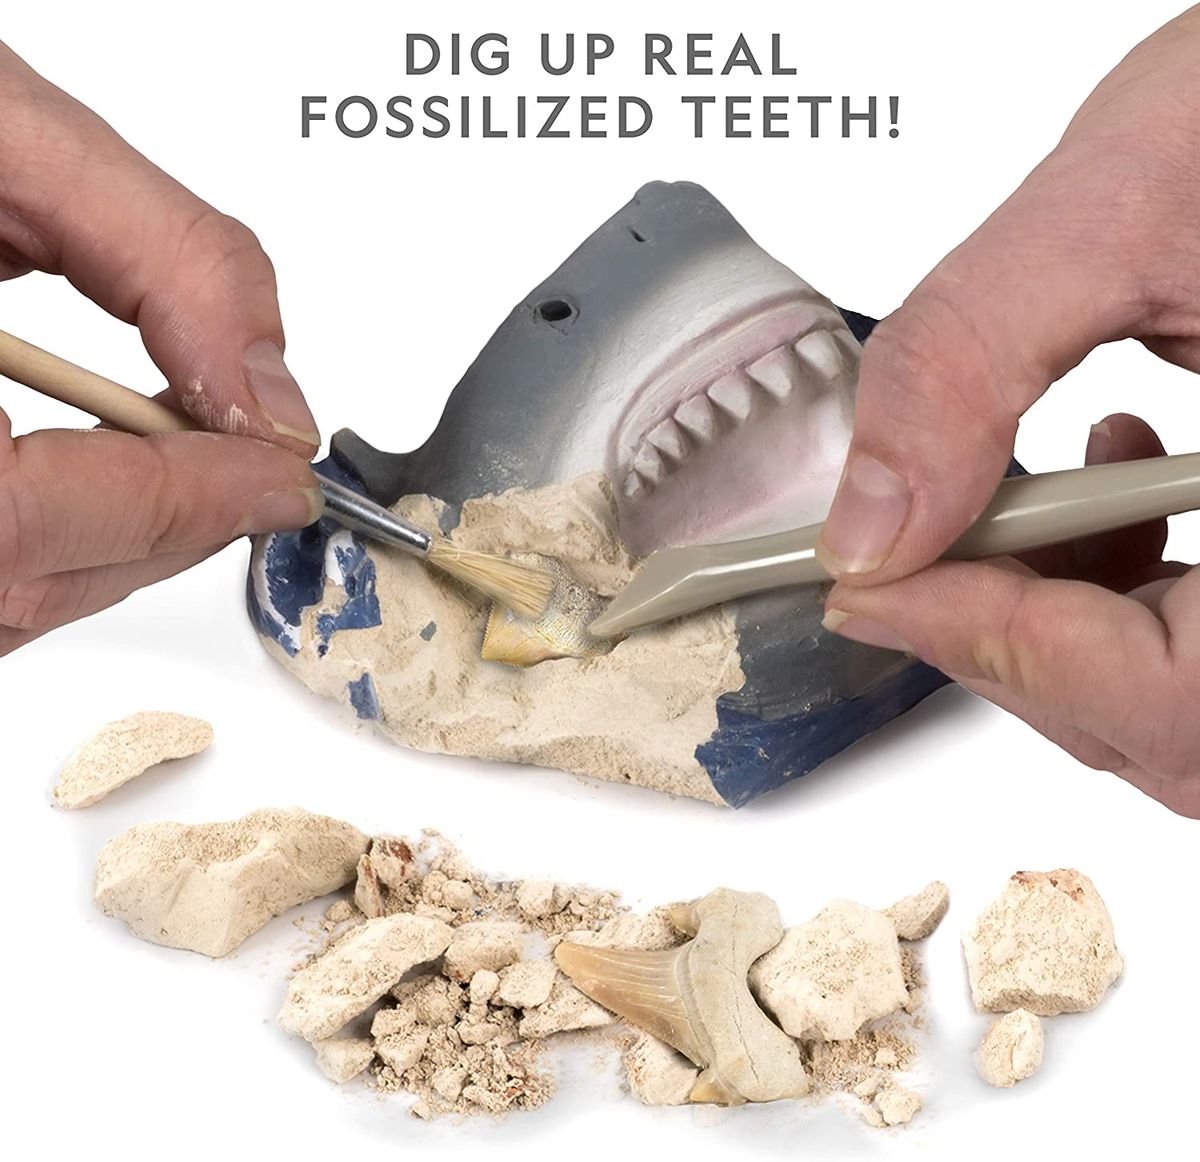 National Geographic Shark Teeth Dig Kit